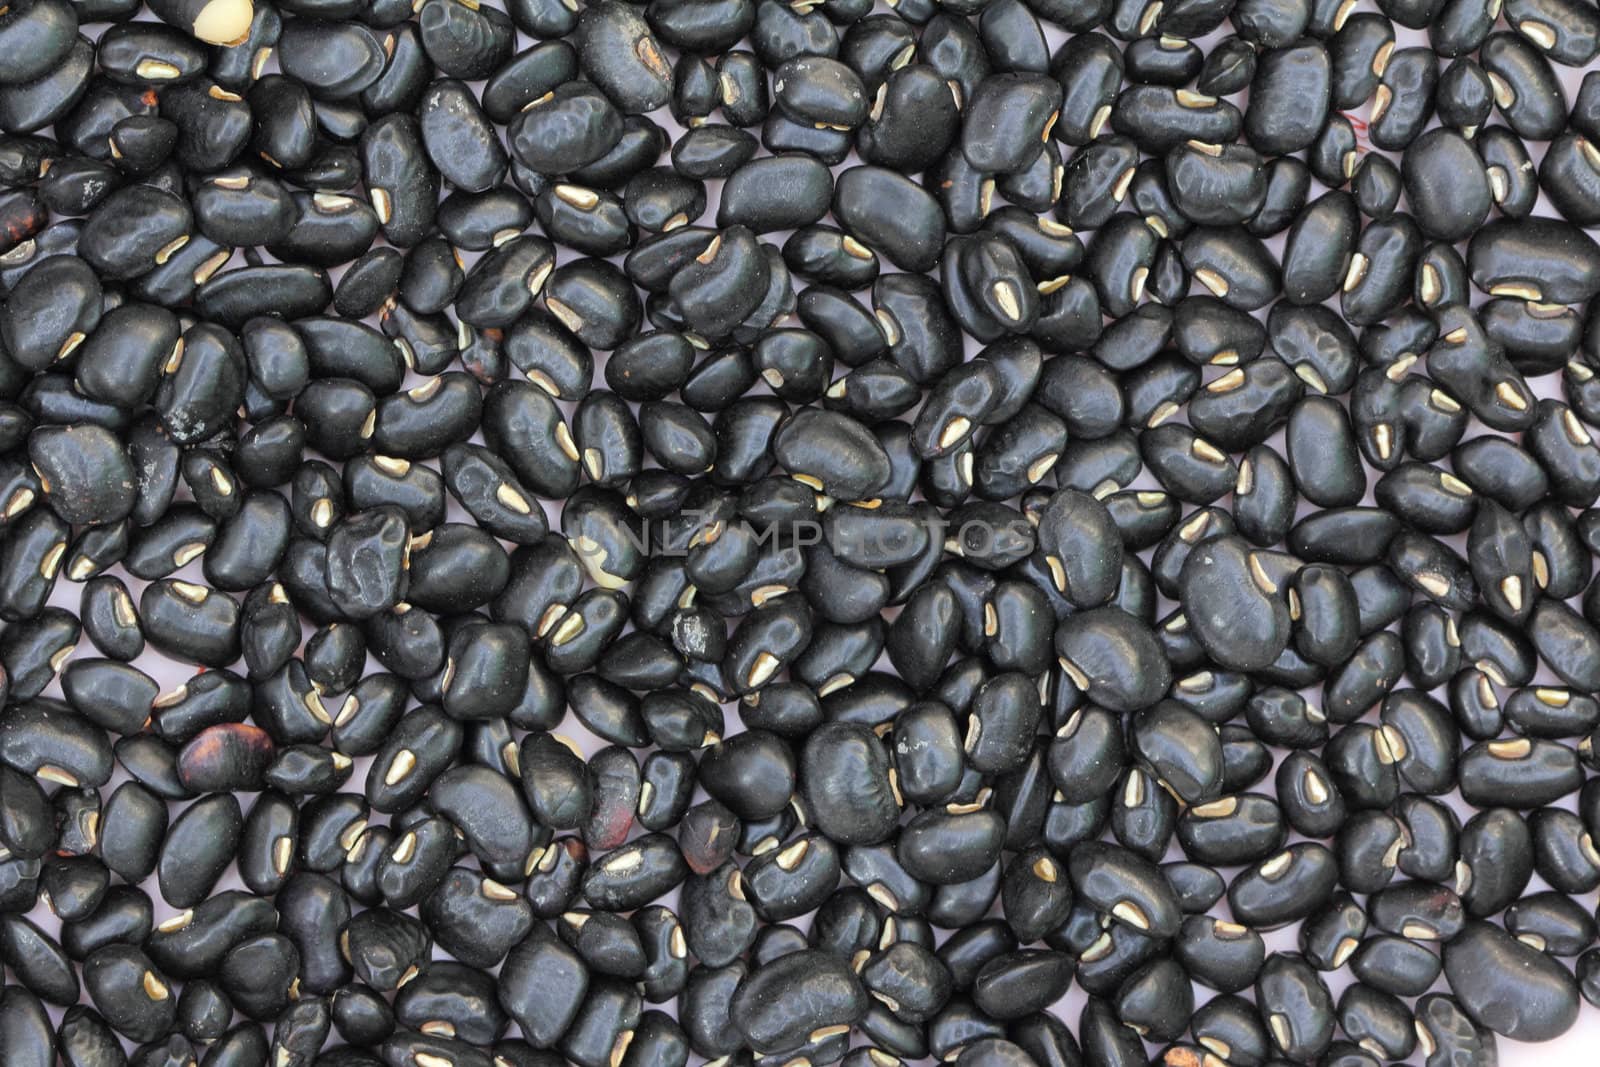 Black beans by wyoosumran